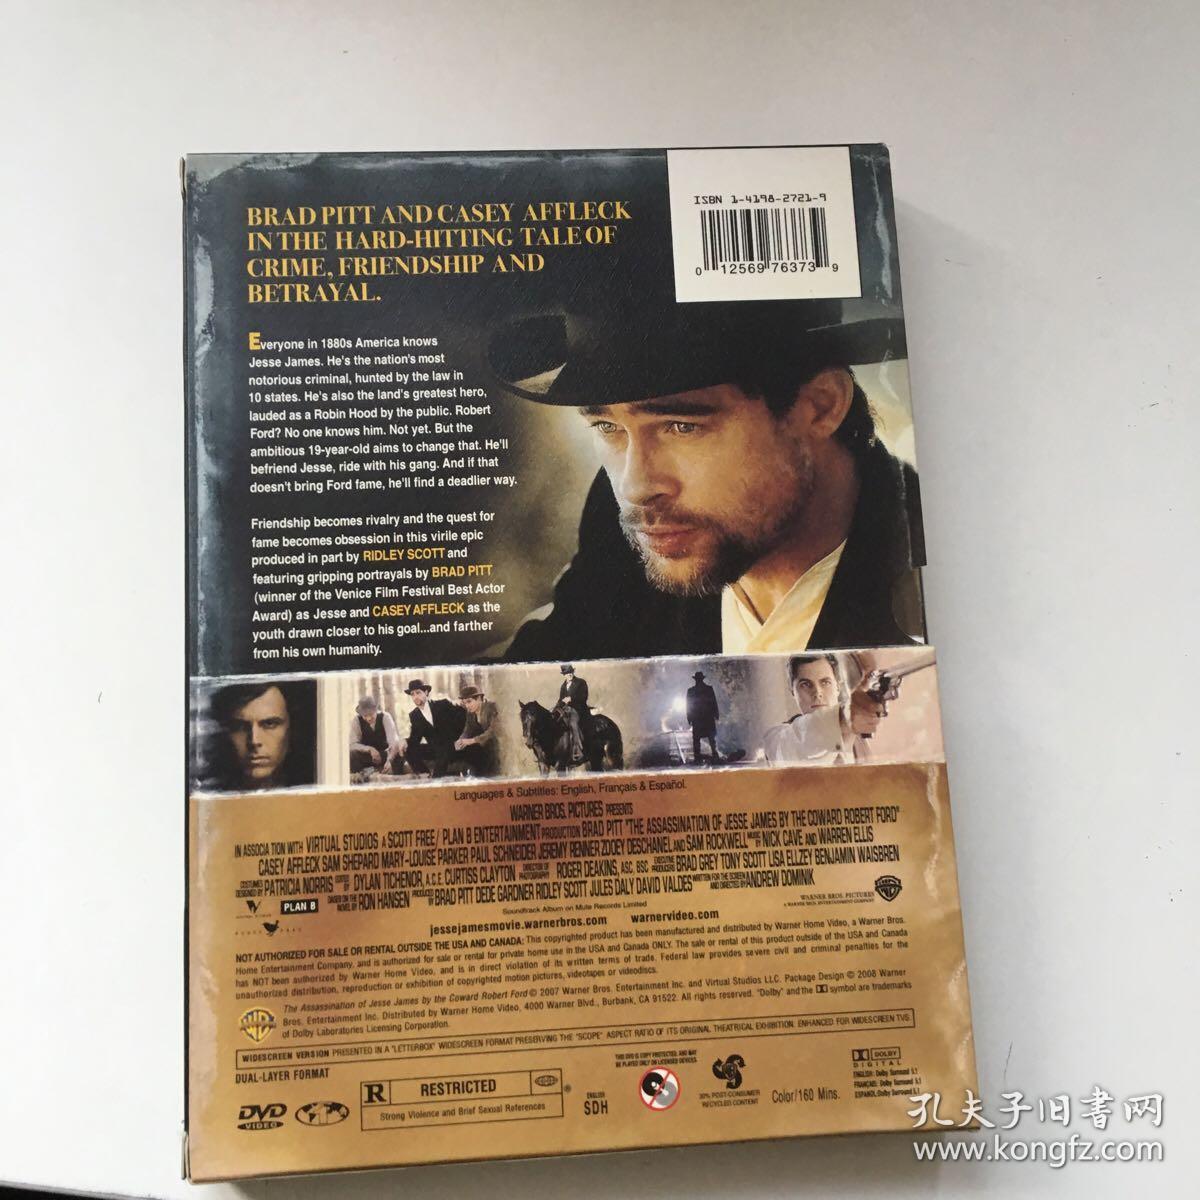 DVD 光盘 1碟盒装：神枪手之死 The Assassination of Jesse James by the Coward Robert Ford (2007)又名: 刺杀神枪侠 / 刺杀杰西·詹姆斯 / 刺杀神枪手 / 叛逆暗殺 /  刺杀杰西